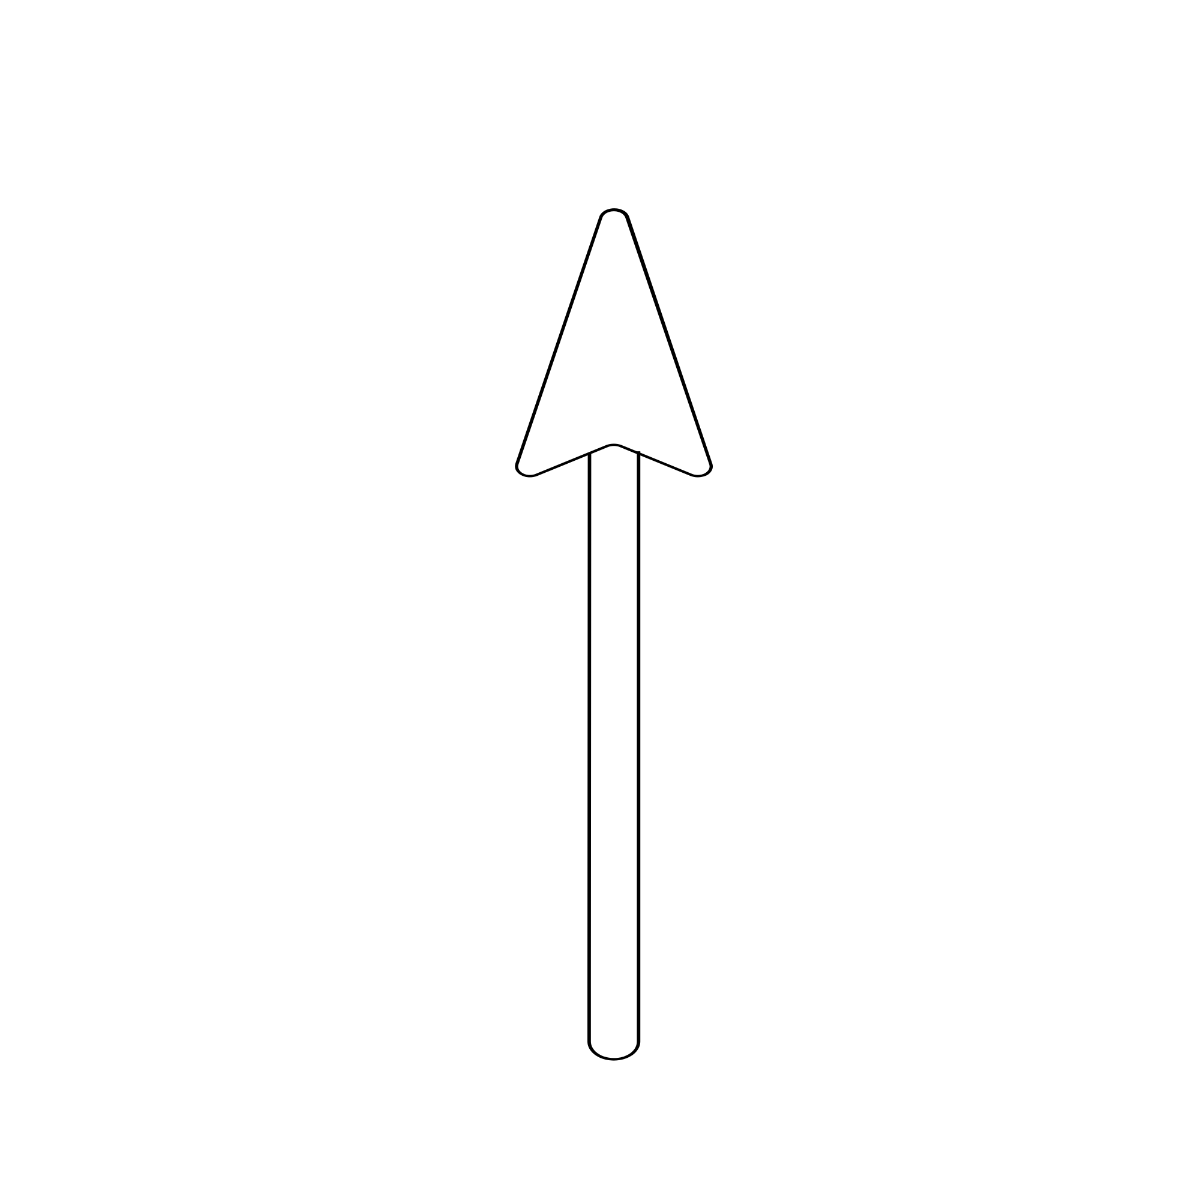 Simple Black Arrow Vector Template